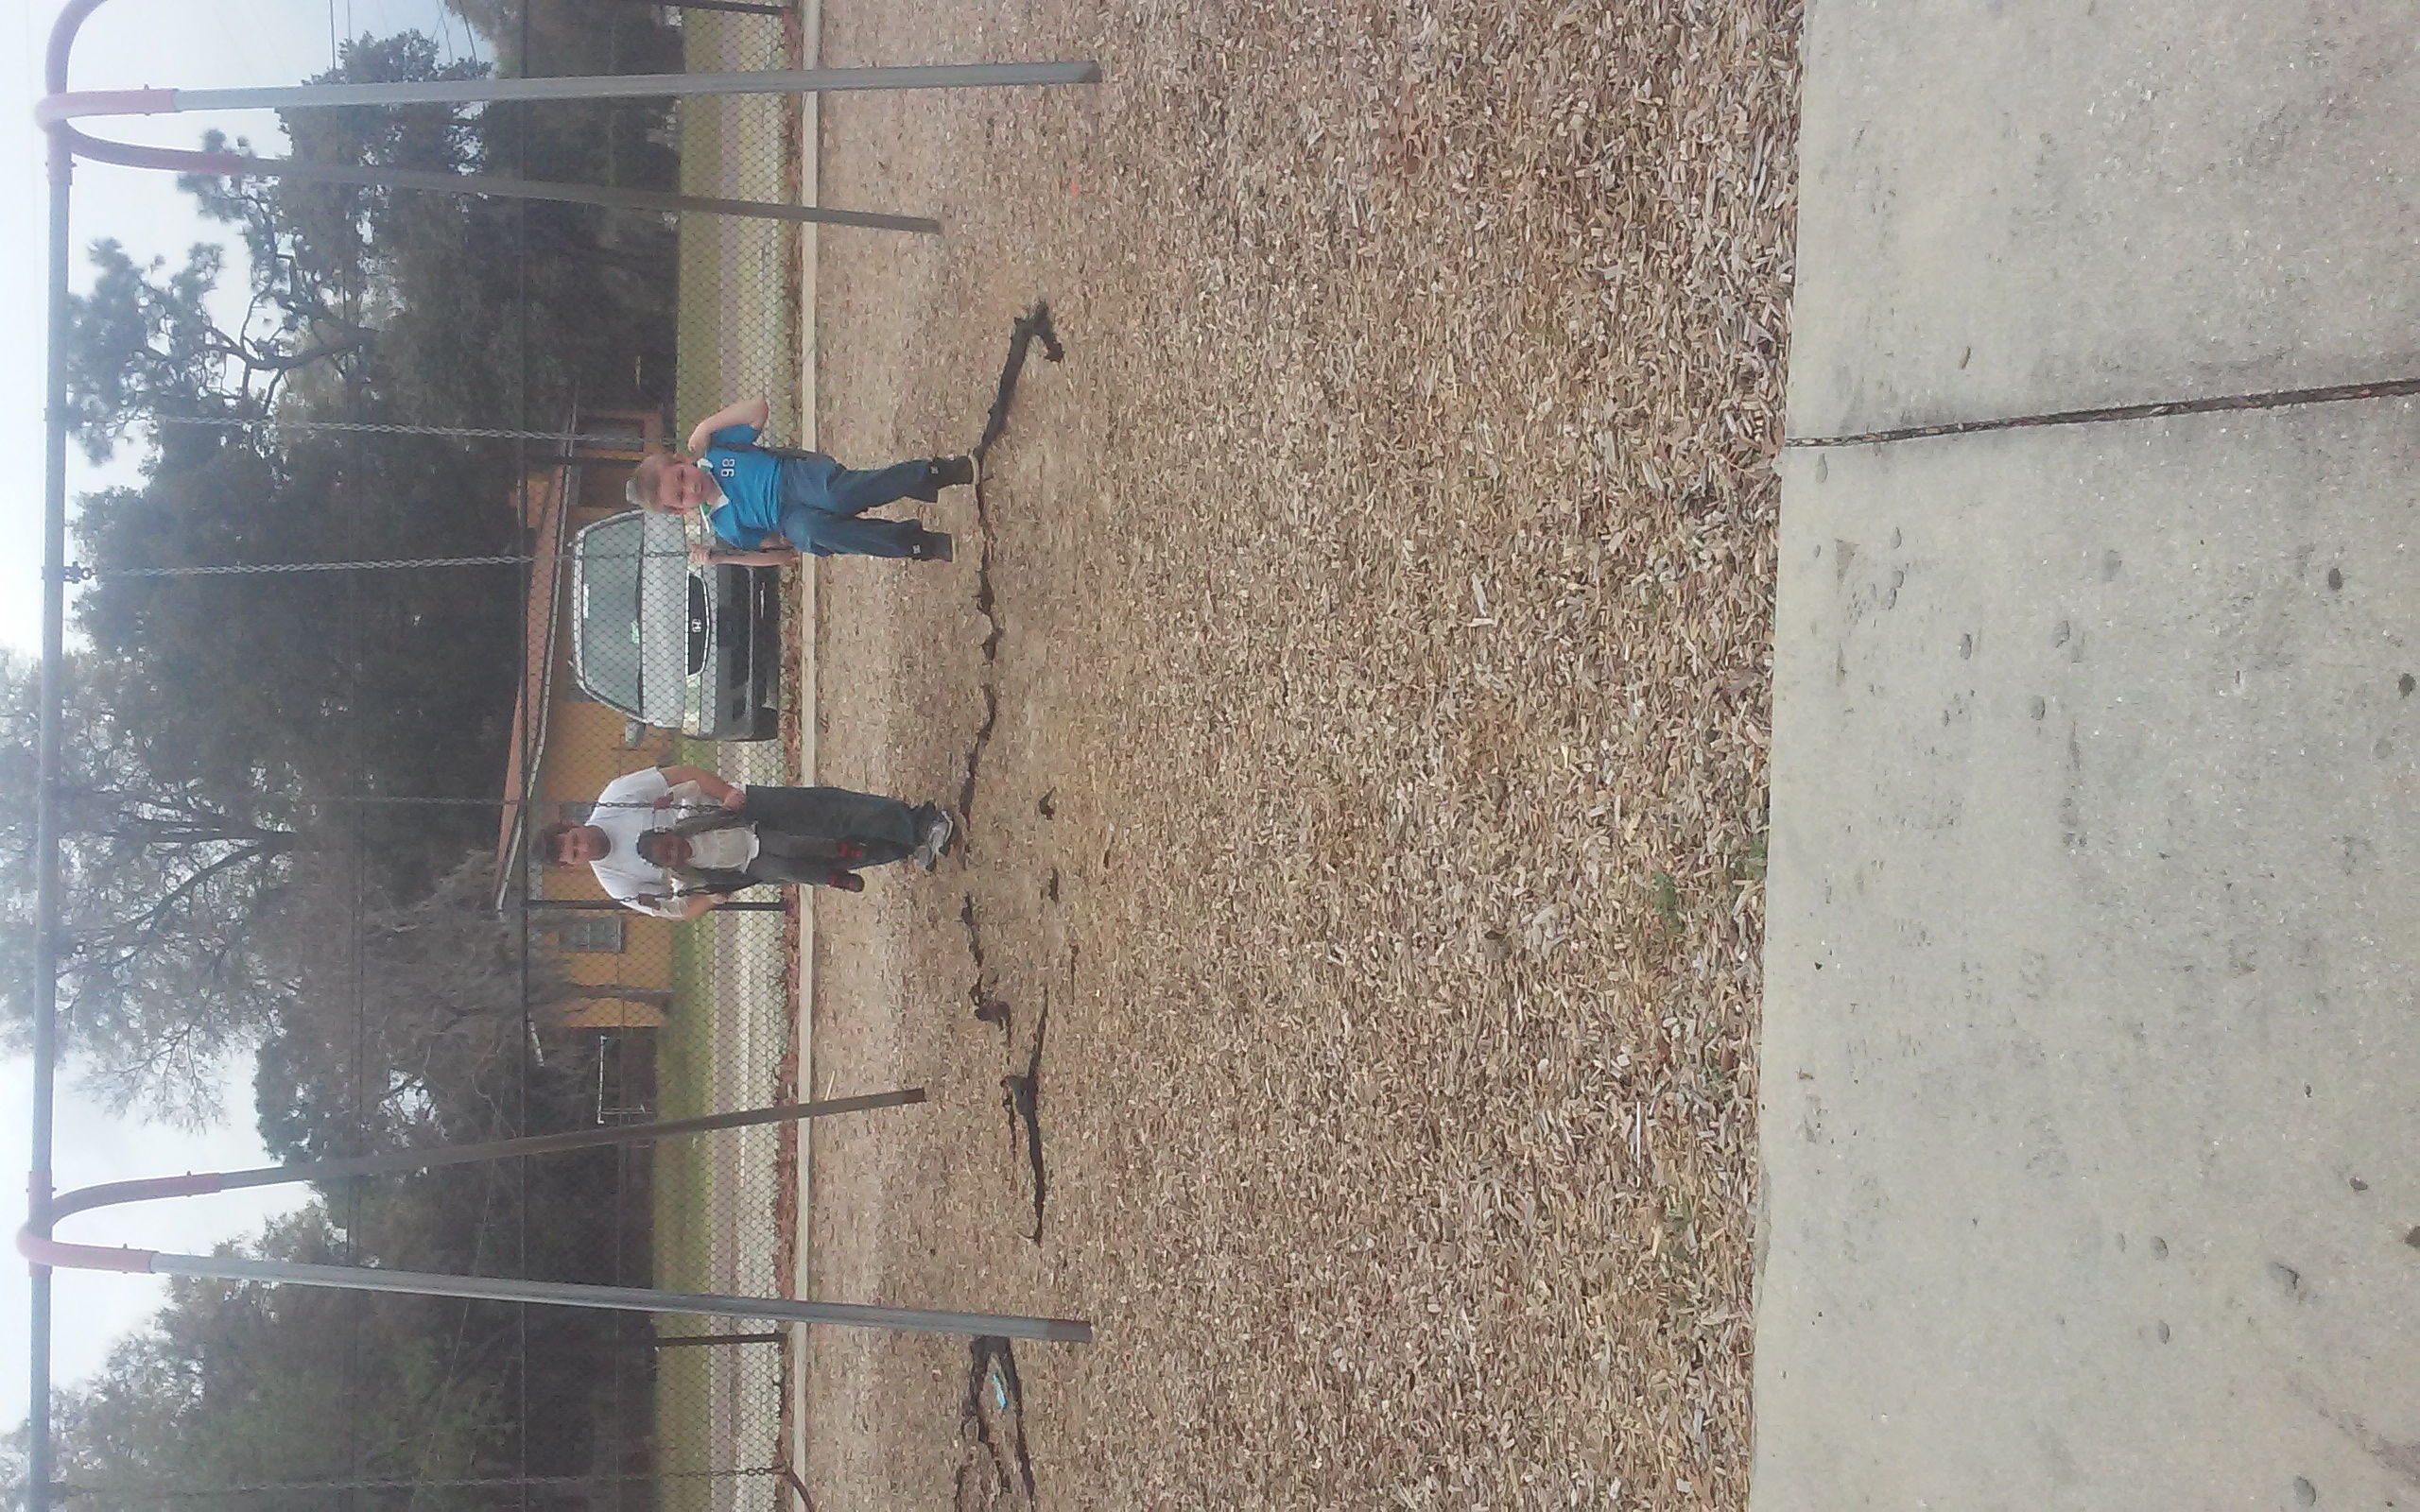 Husband pushing Kids on the swings